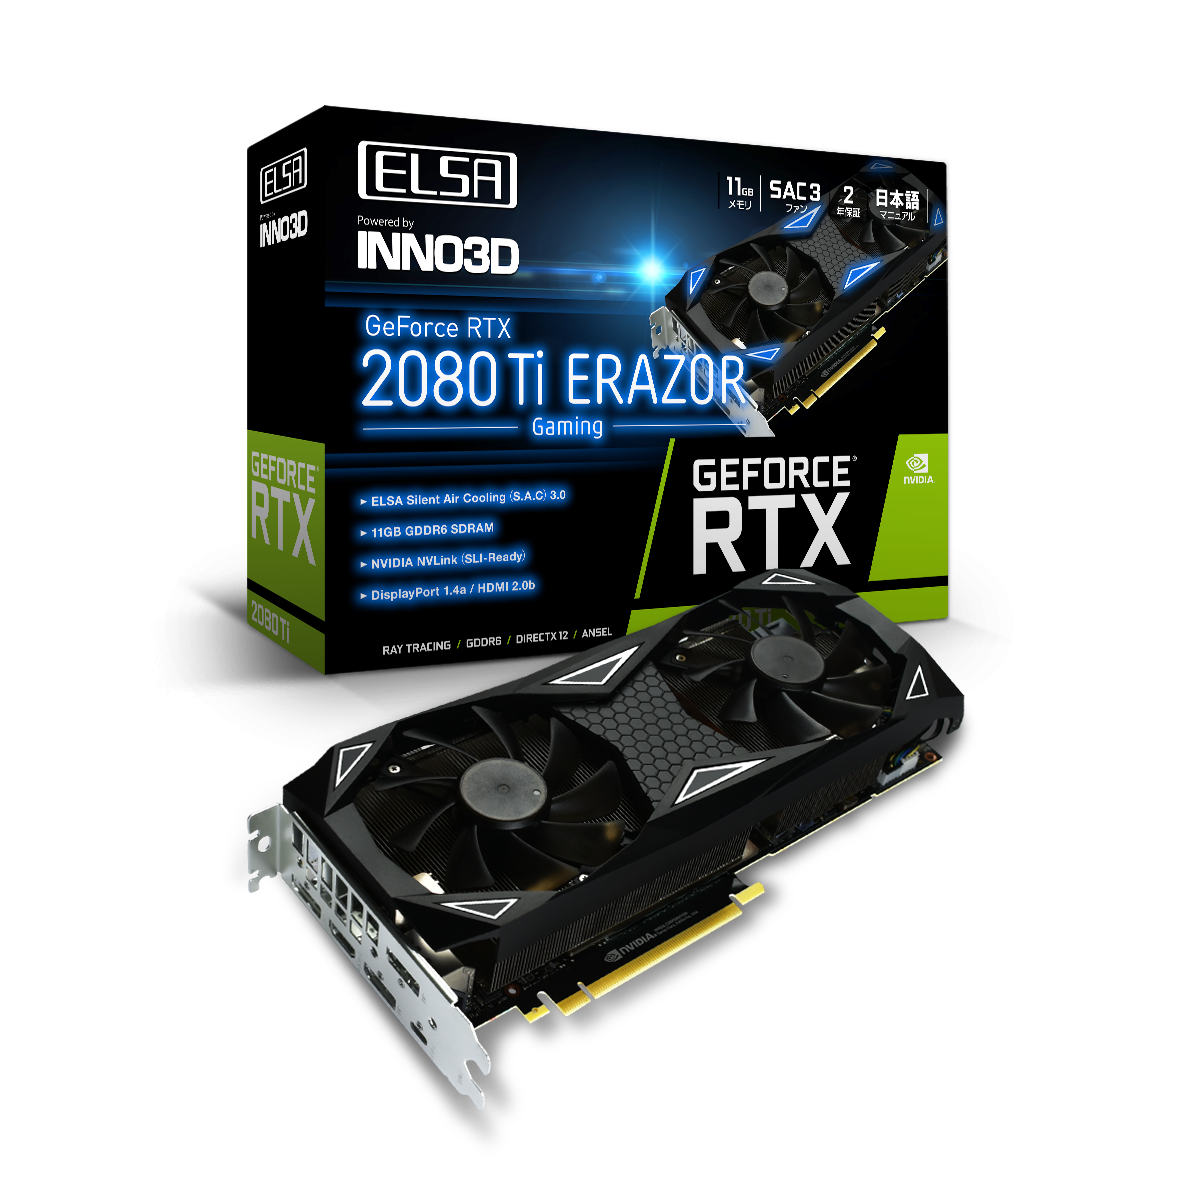 ELSA GeForce® RTX 2080 Ti™ ERAZOR GAMING - 株式会社 エルザ ジャパン